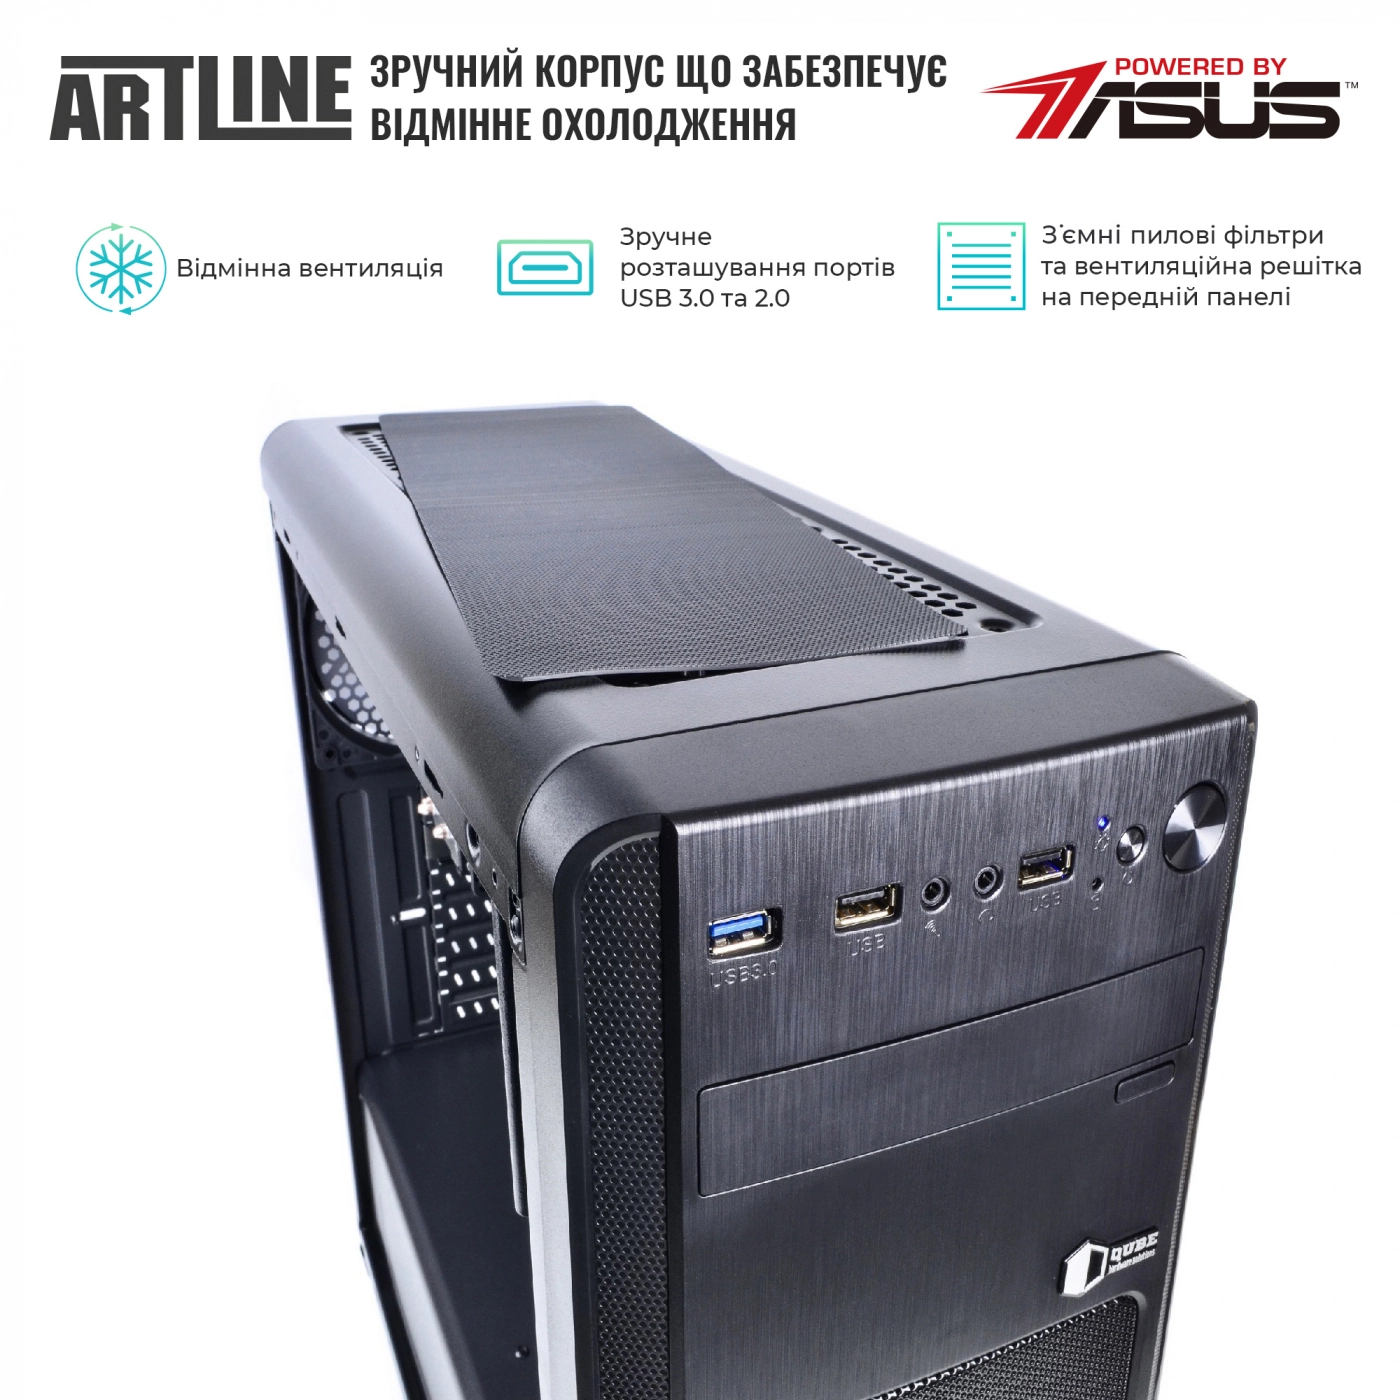 Купити Сервер ARTLINE Business T17v20 - фото 2